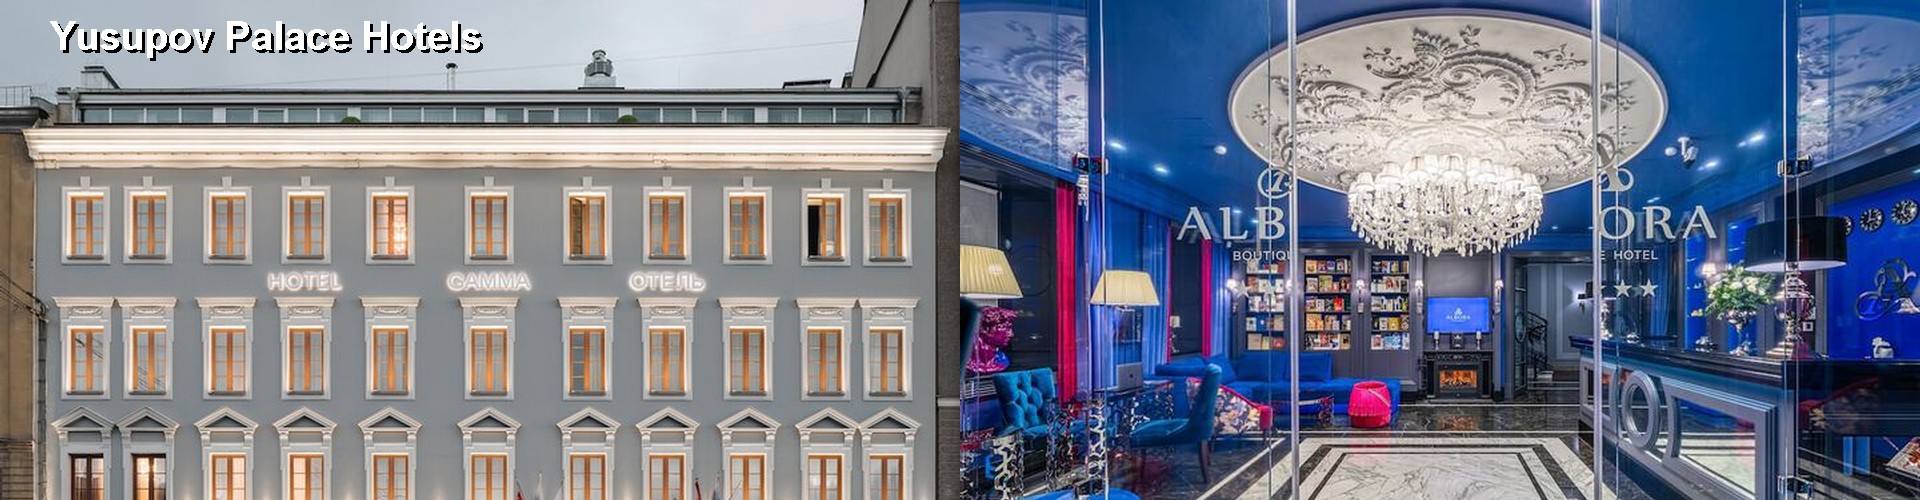 5 Best Hotels near Yusupov Palace